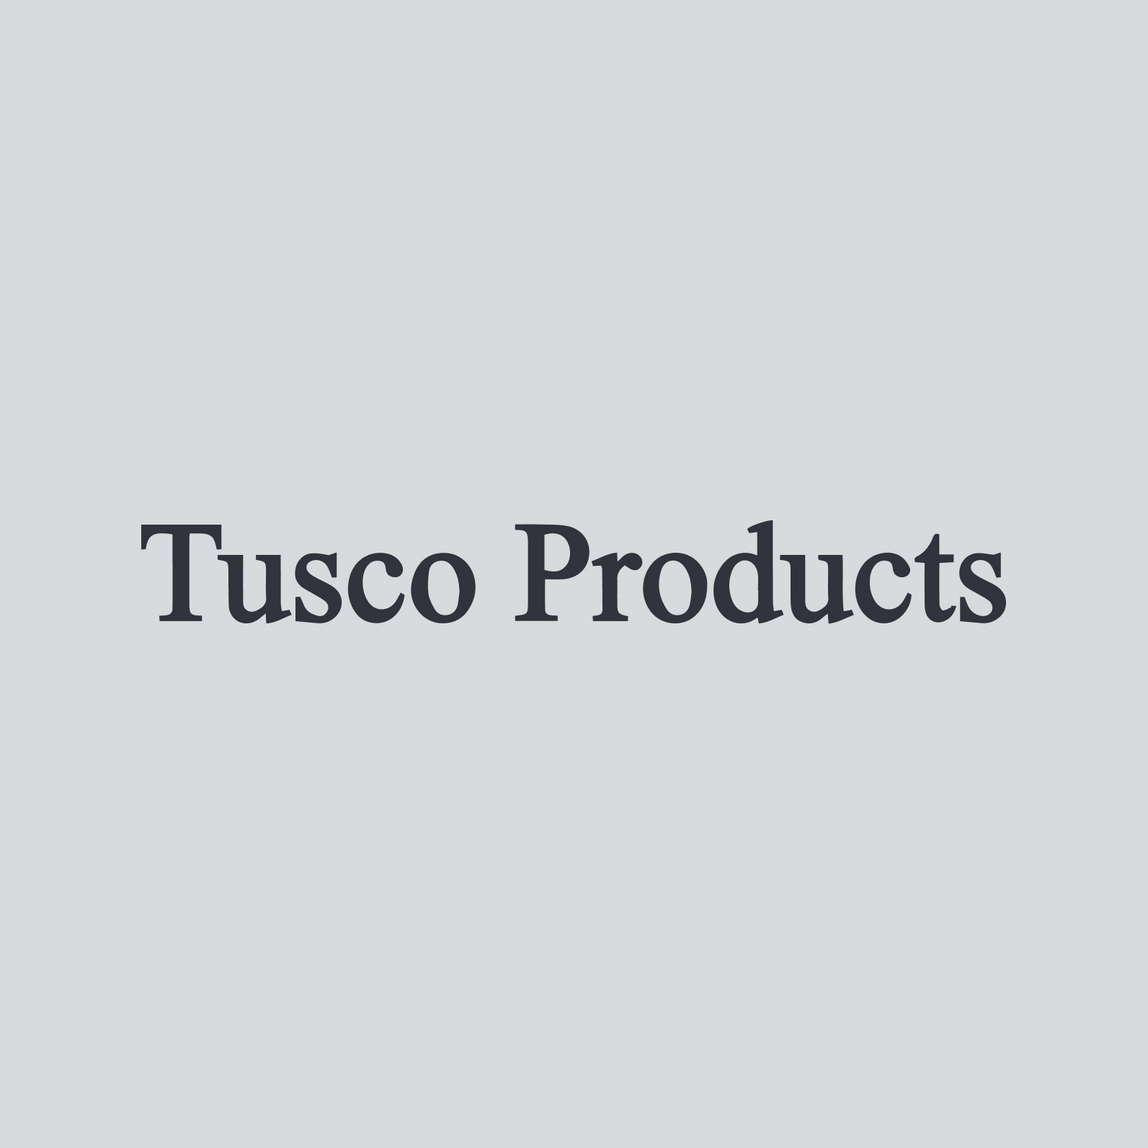 Tusco Products